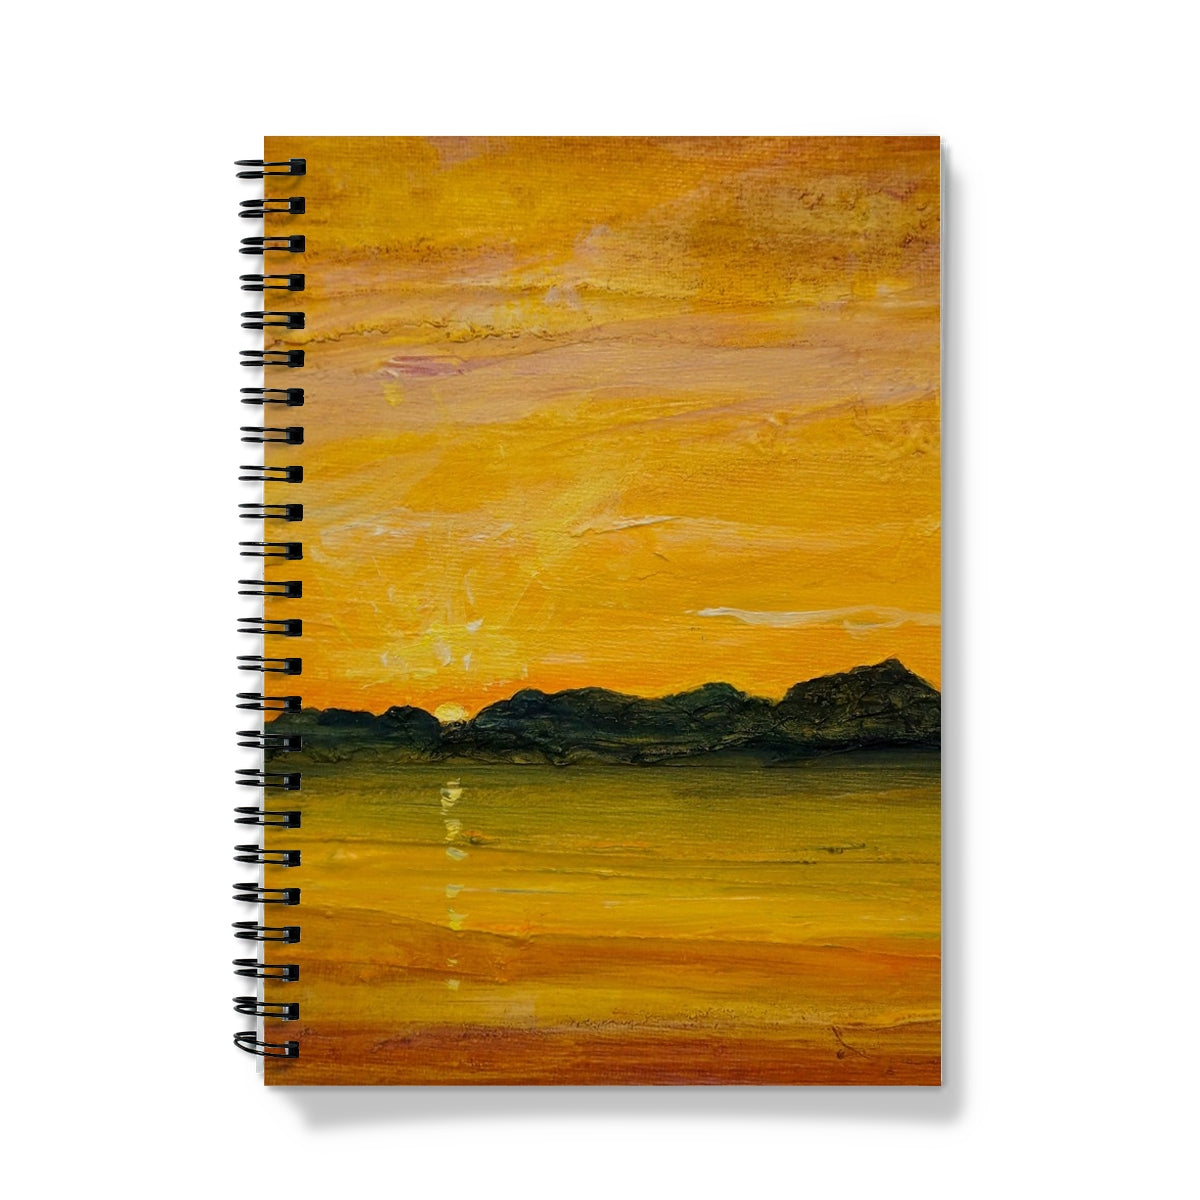 Jura Sunset Art Gifts Notebook-Journals & Notebooks-Hebridean Islands Art Gallery-A4-Lined-Paintings, Prints, Homeware, Art Gifts From Scotland By Scottish Artist Kevin Hunter